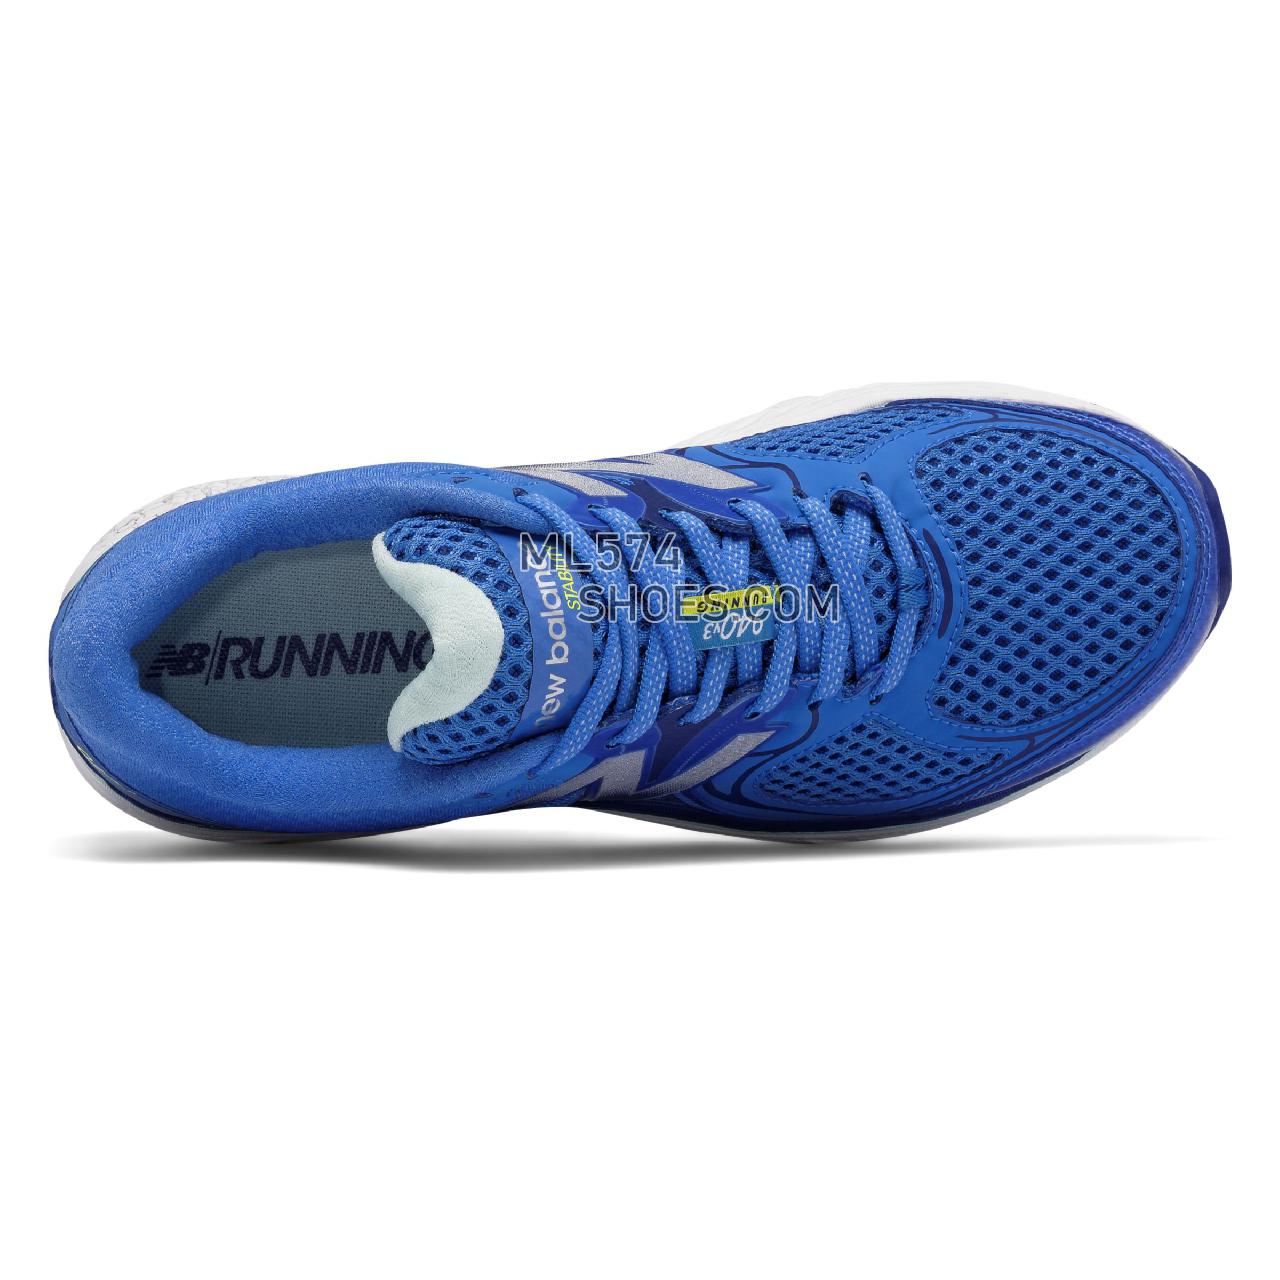 New Balance 940v3 - Women's 940 - Running Blue with White - W940BB3